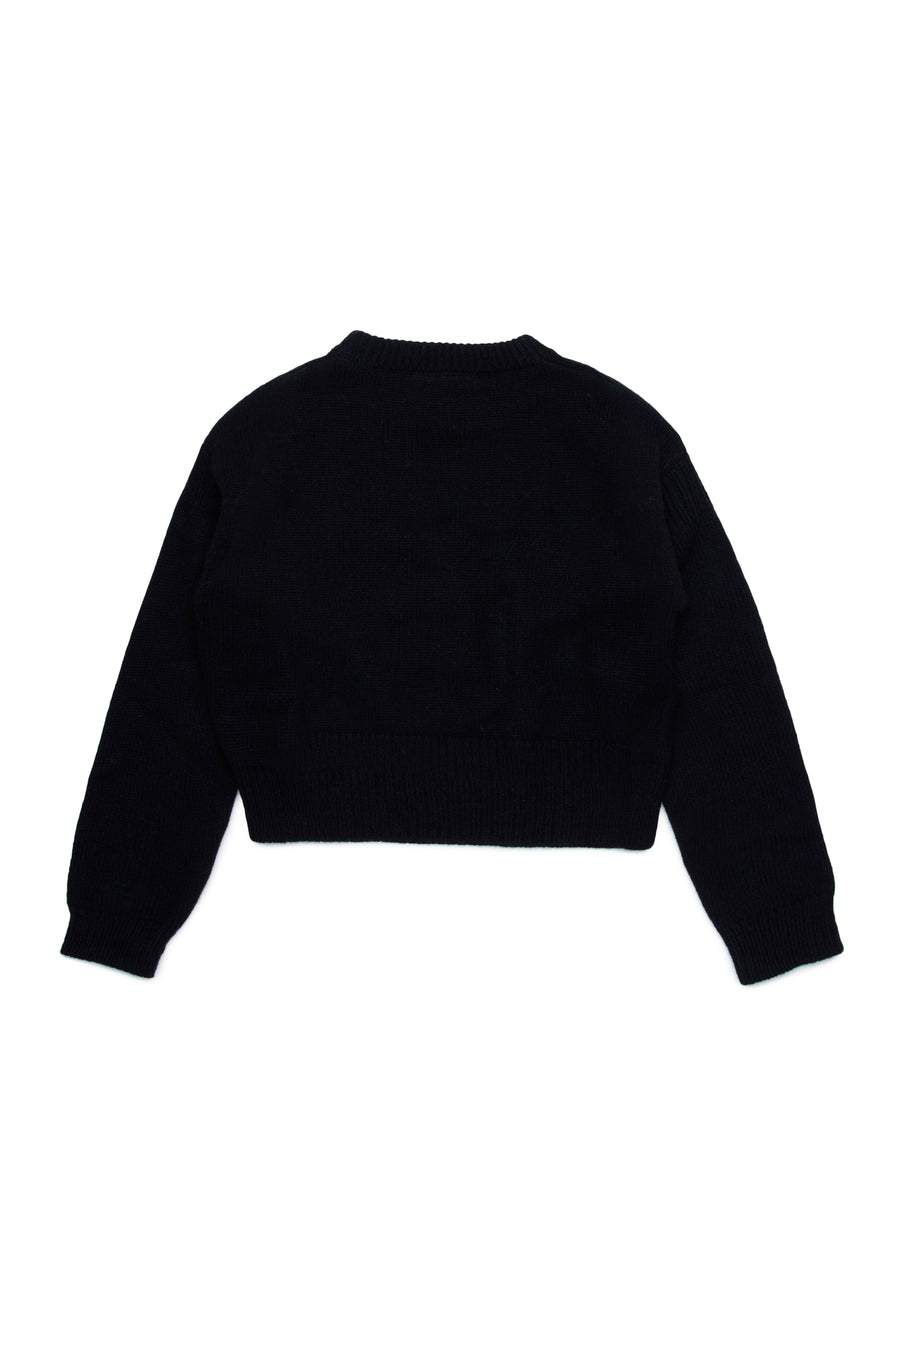 Marni print sweater by Marni